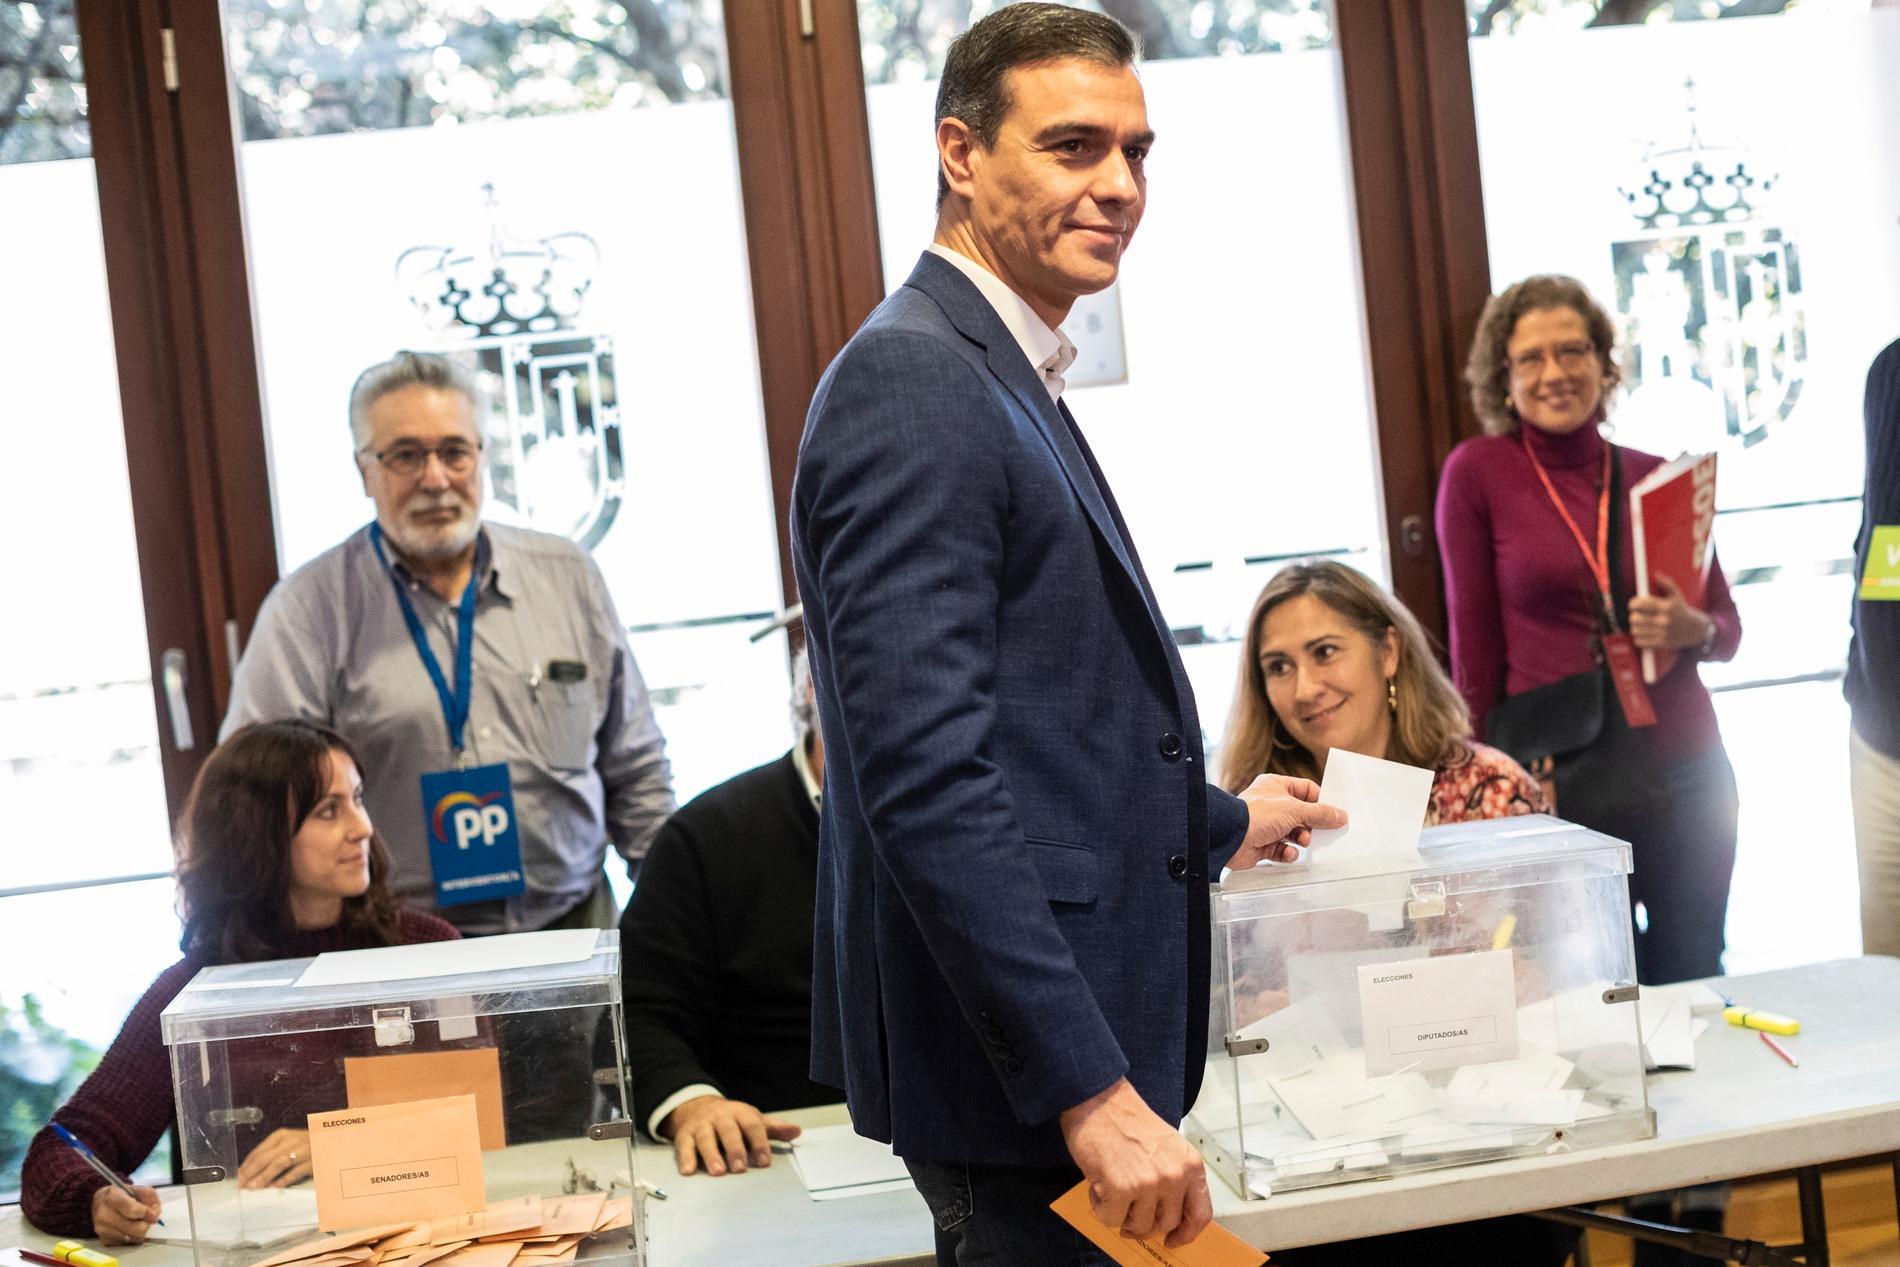 STEMTE: Statsminister Pedro Sanchez avla sin stemme ved valget i Spania søndag. 